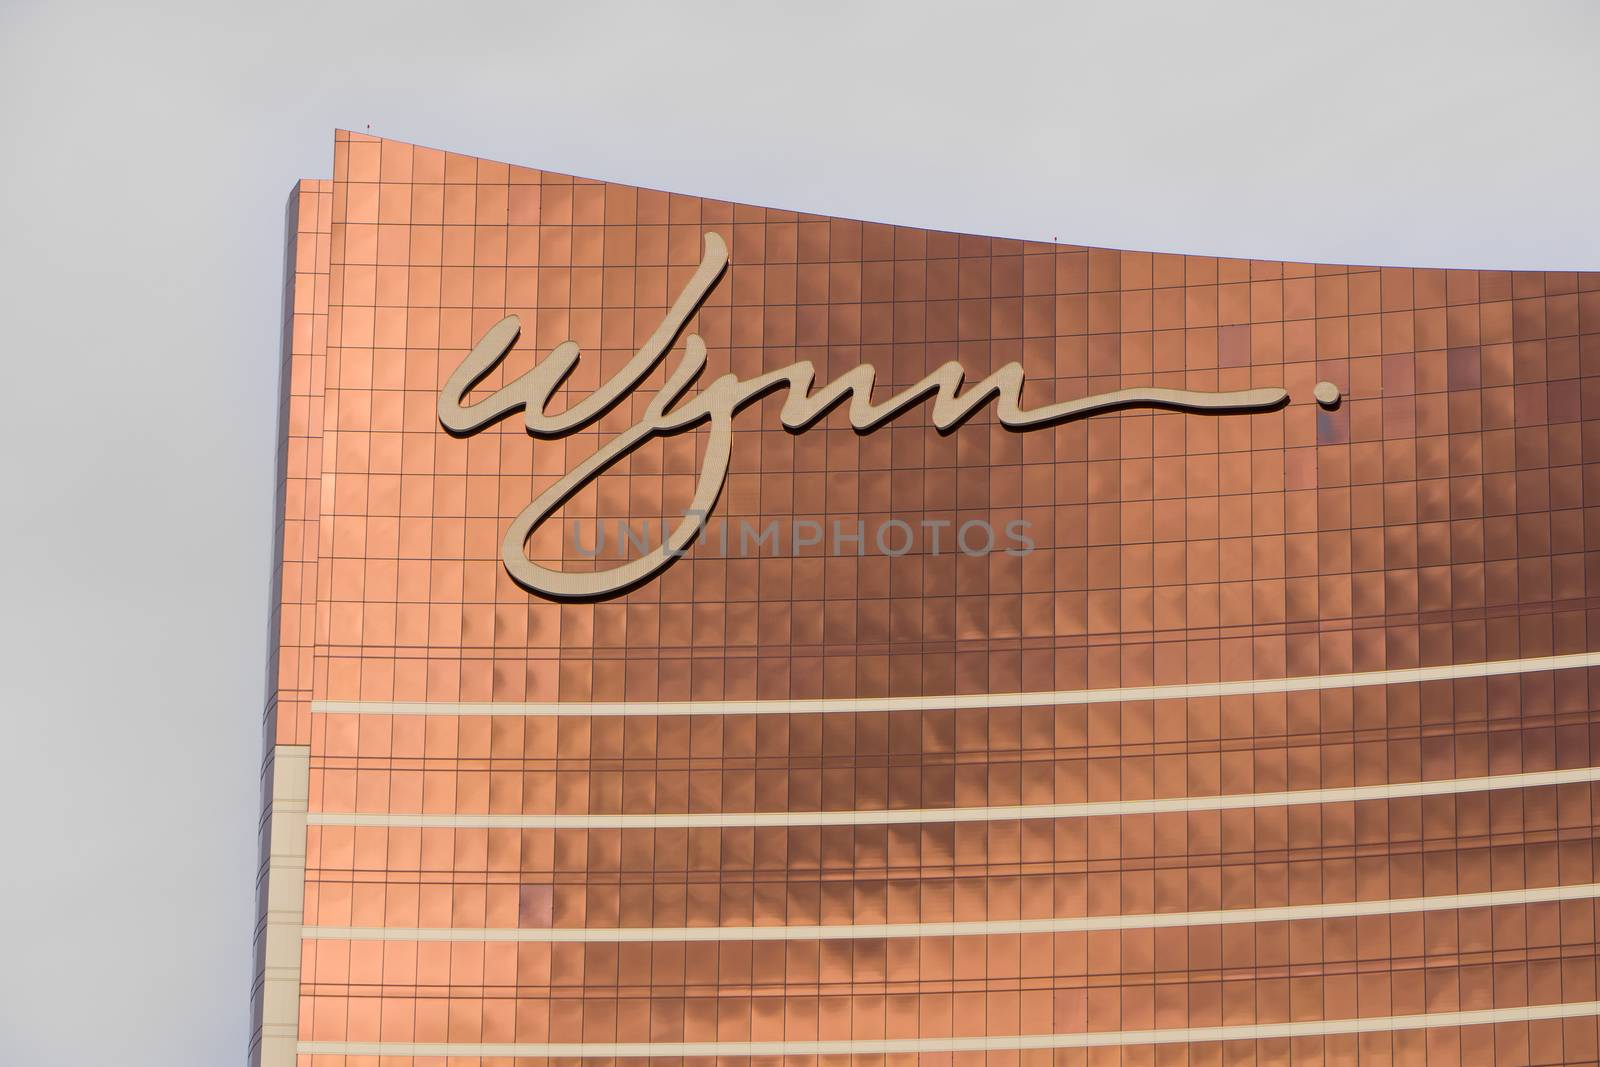 Wynn Las Vegas Resort and Casino by wolterk